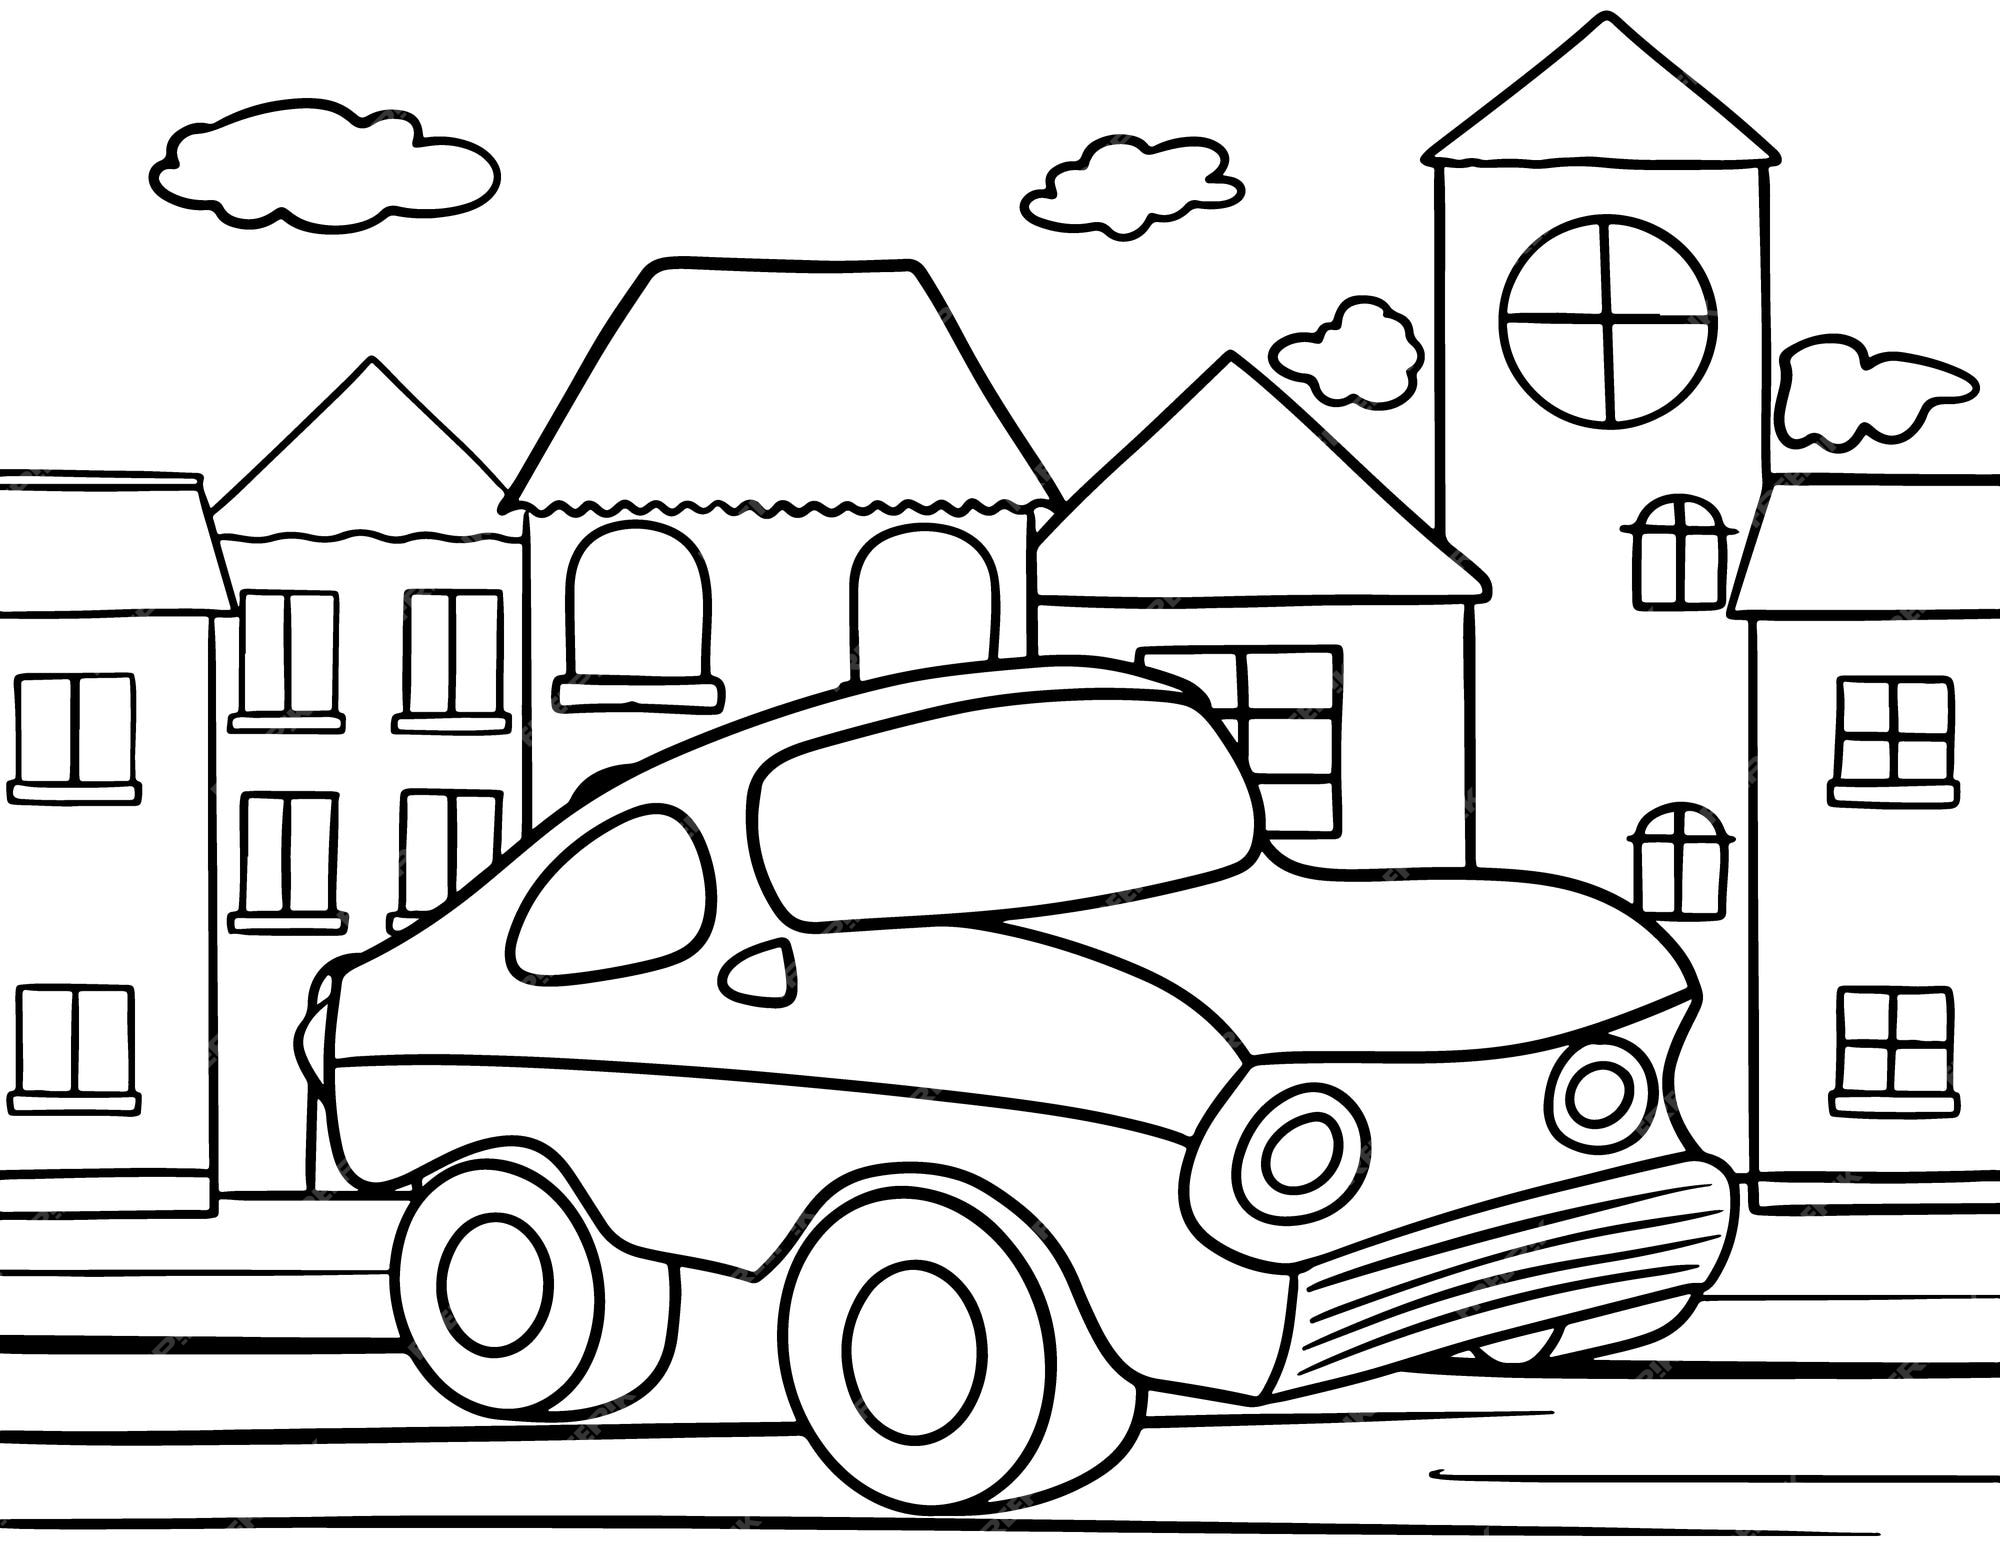 Desenhos de carros para colorir: 35 modelos incríveis!  Truck coloring  pages, Coloring pages, Free coloring pages